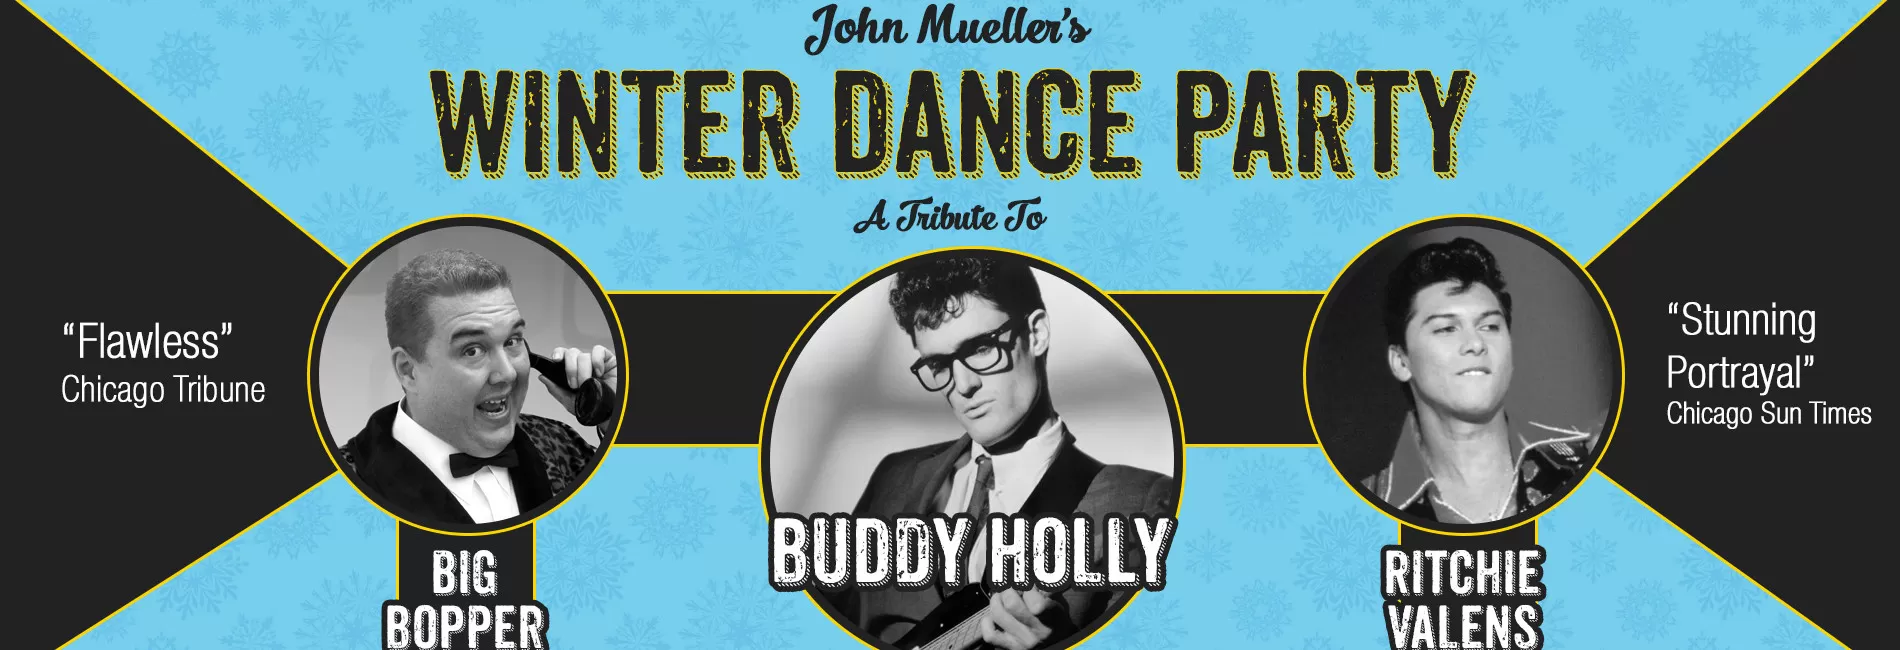 John Mueller's Winter Dance Party